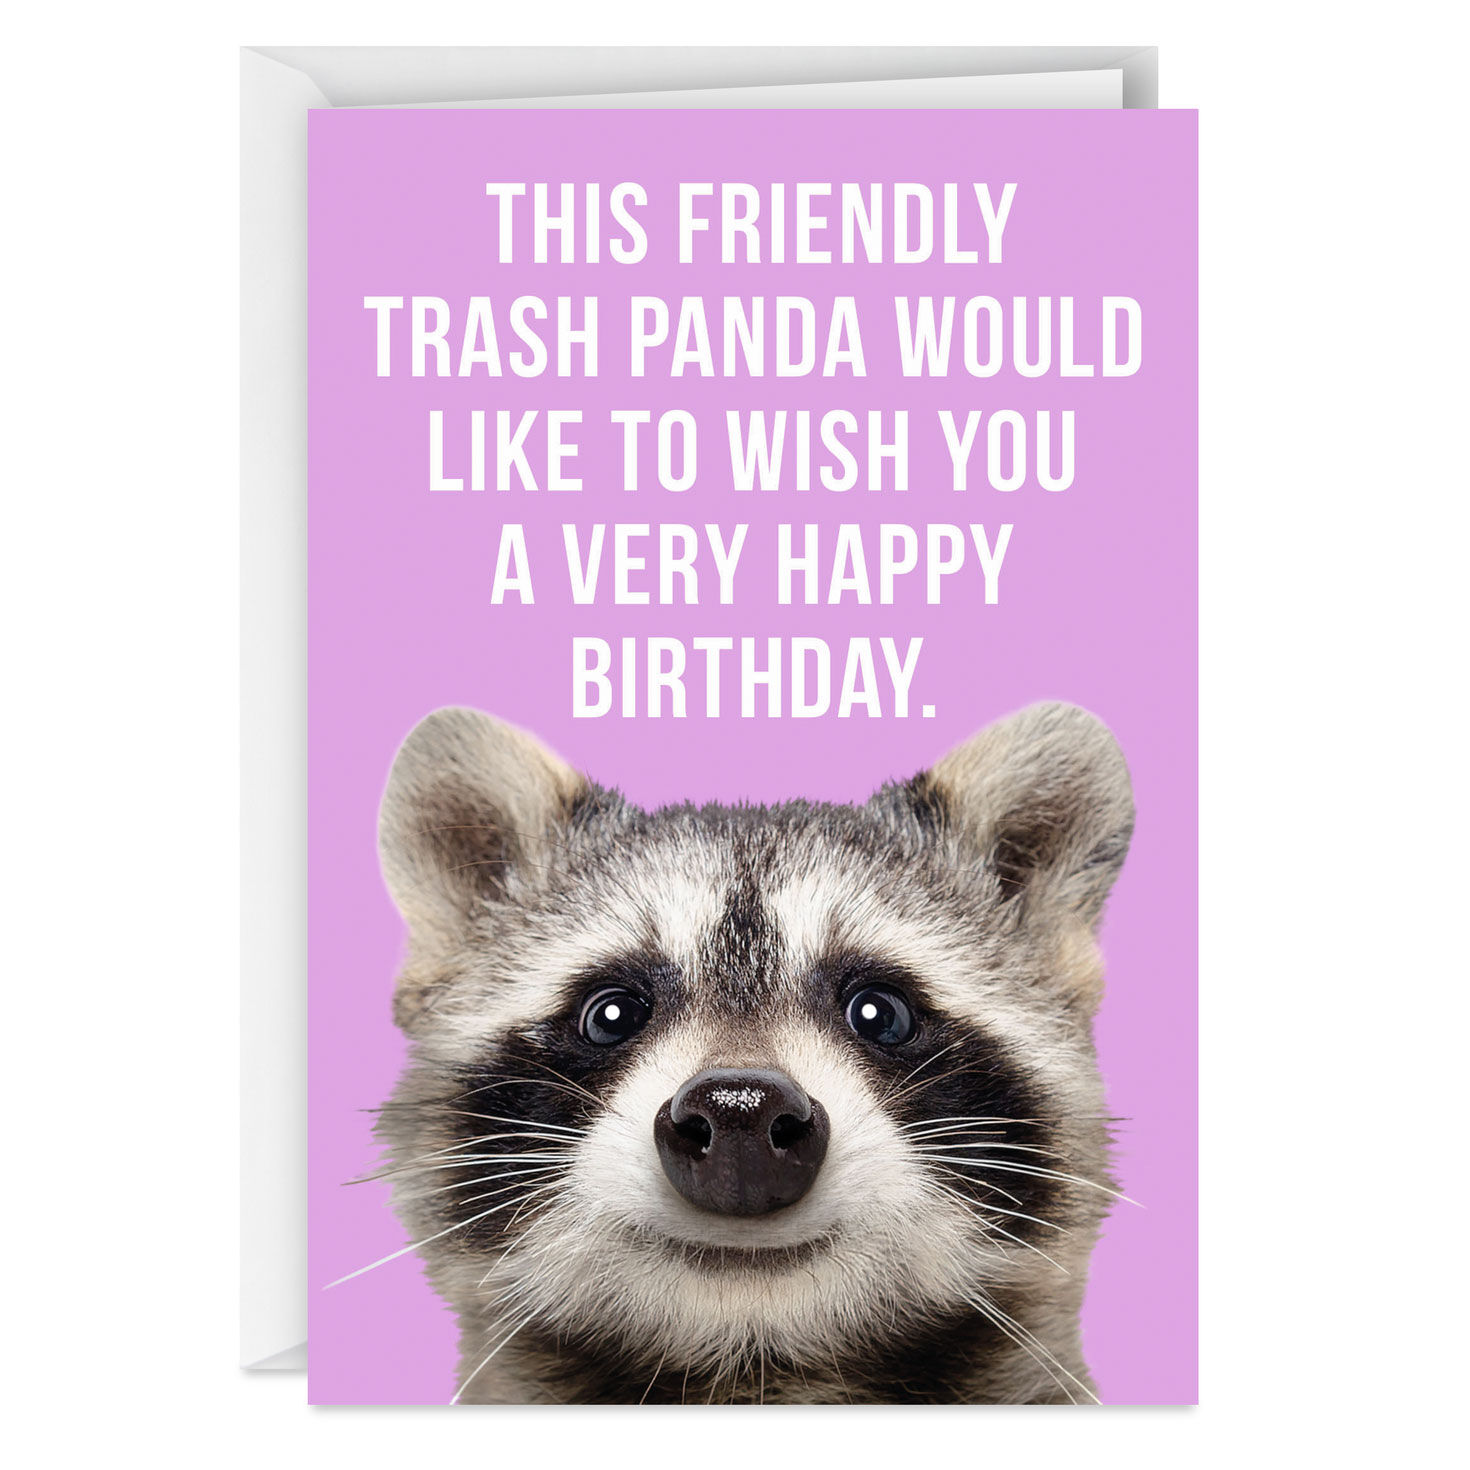 Friendly Trash Panda Funny Birthday Card - Greeting Cards - Hallmark